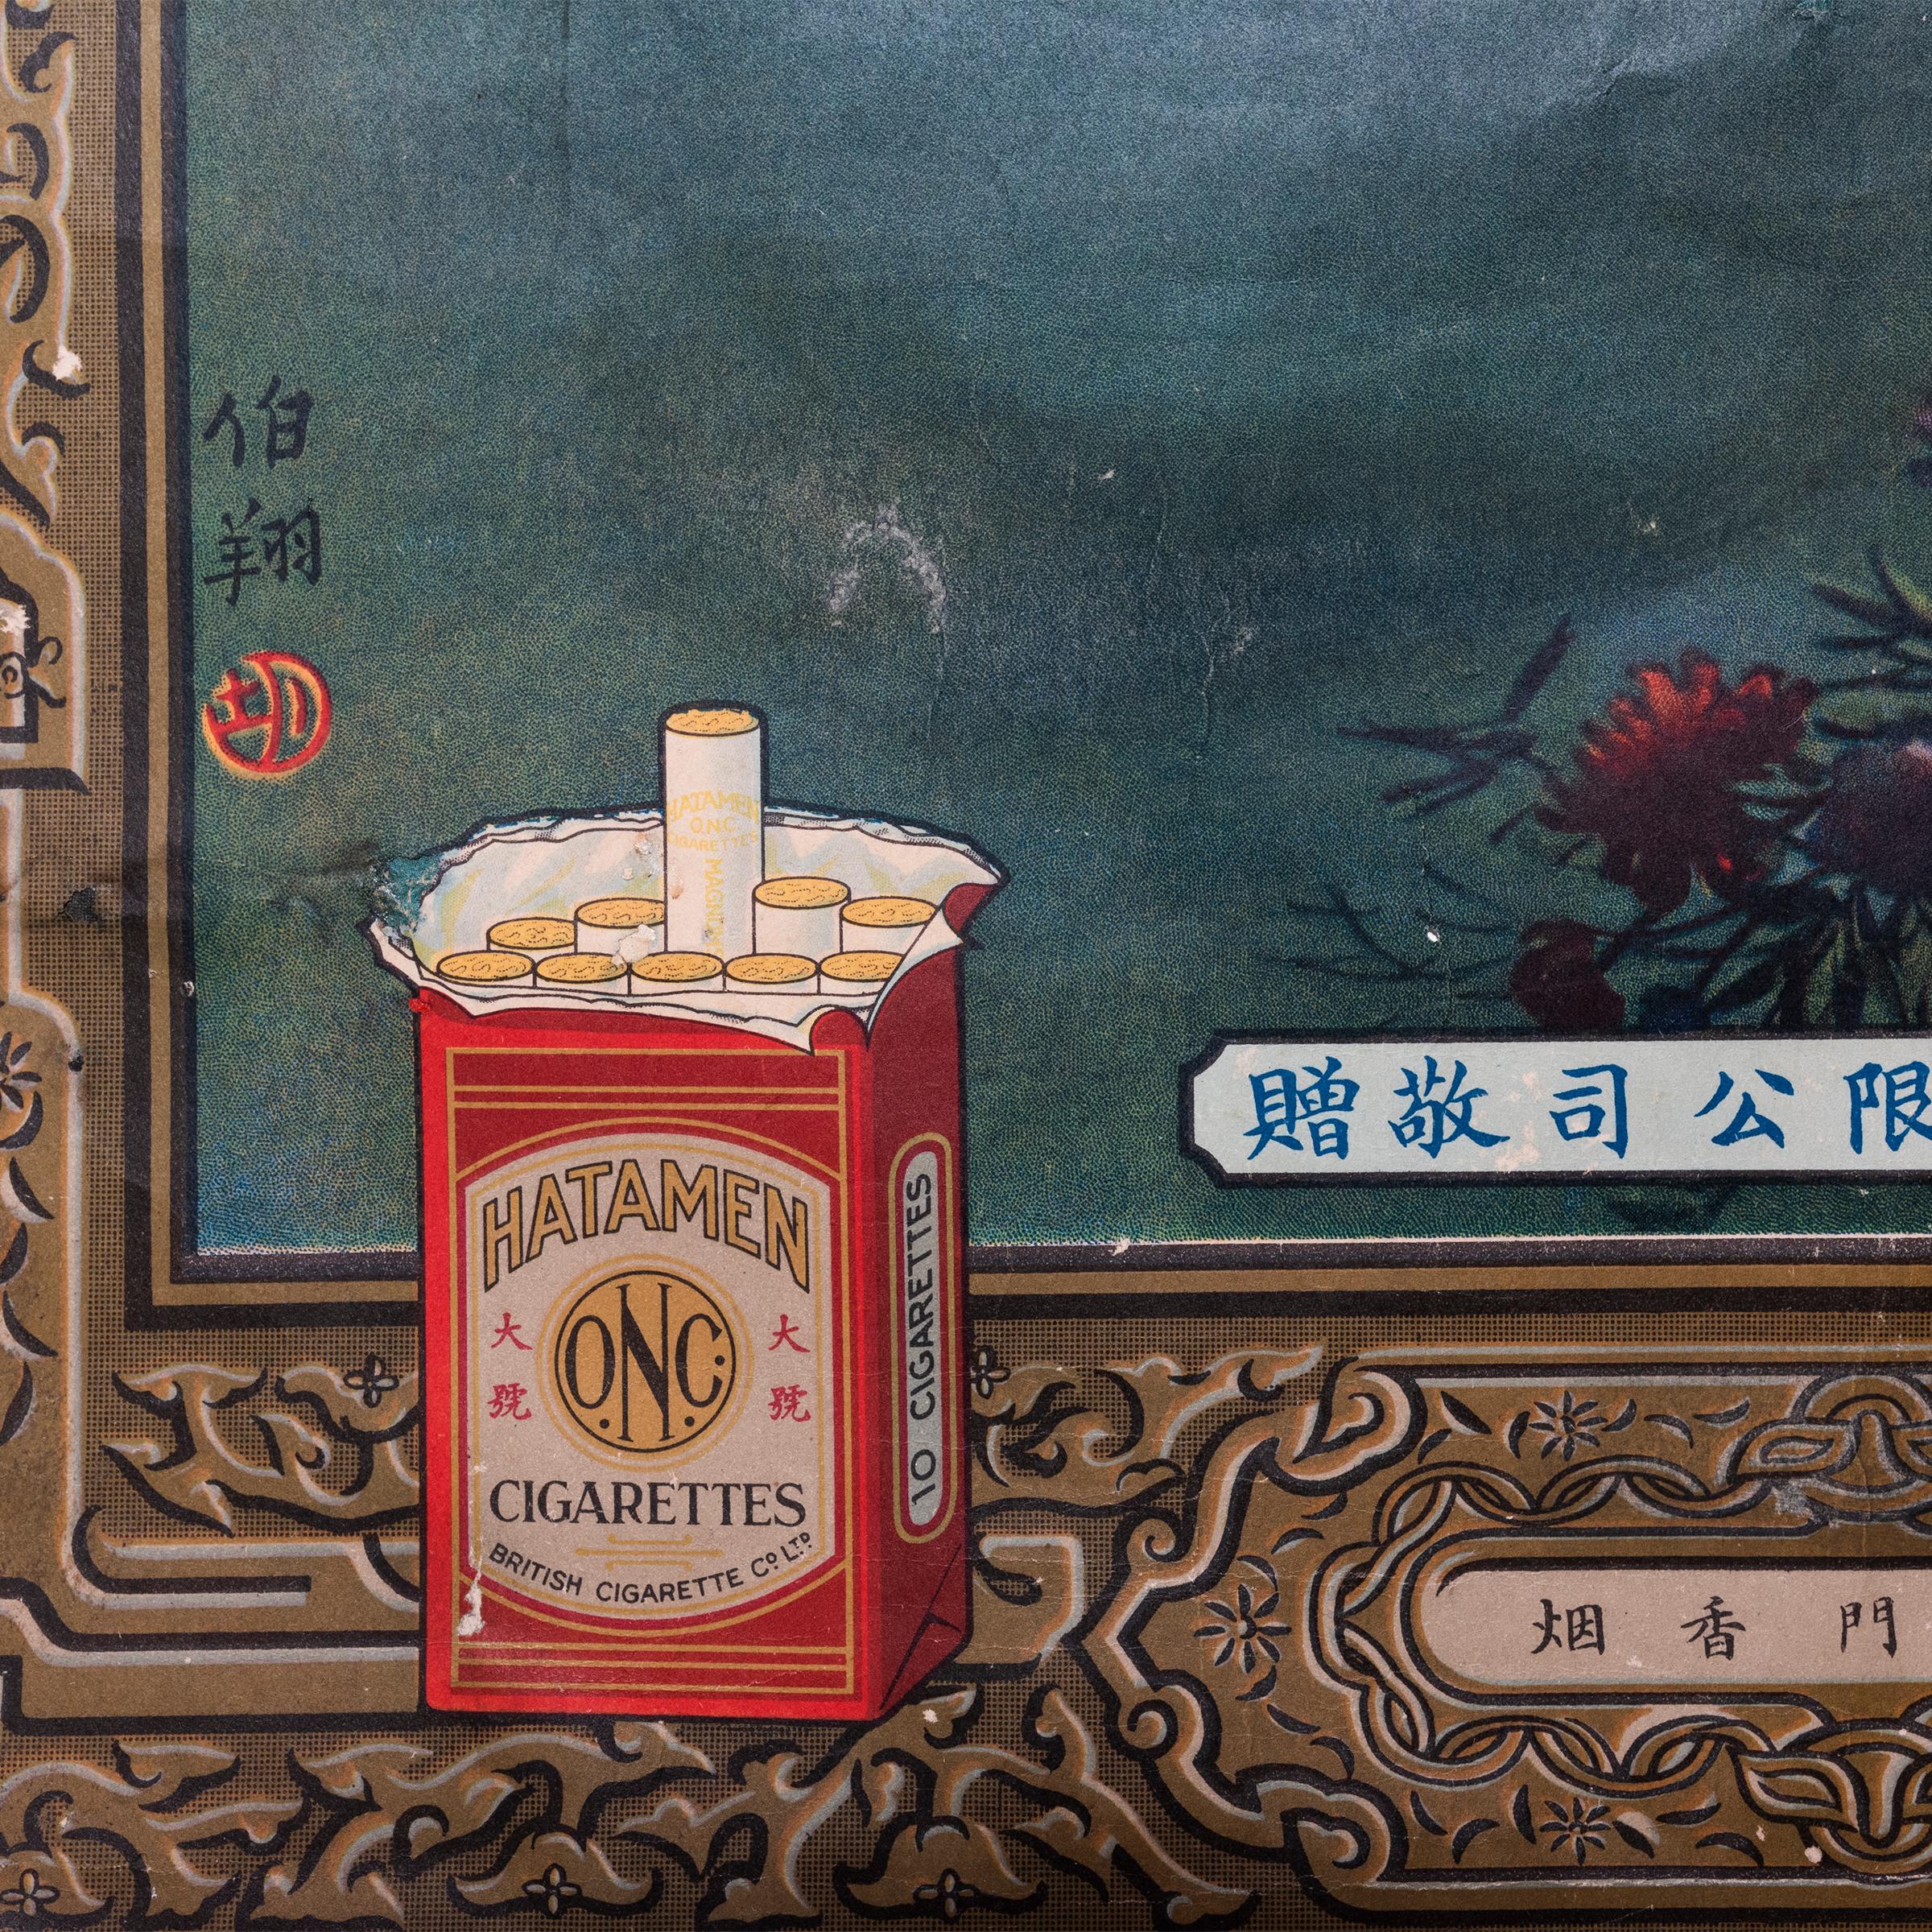 hatamen cigarettes poster